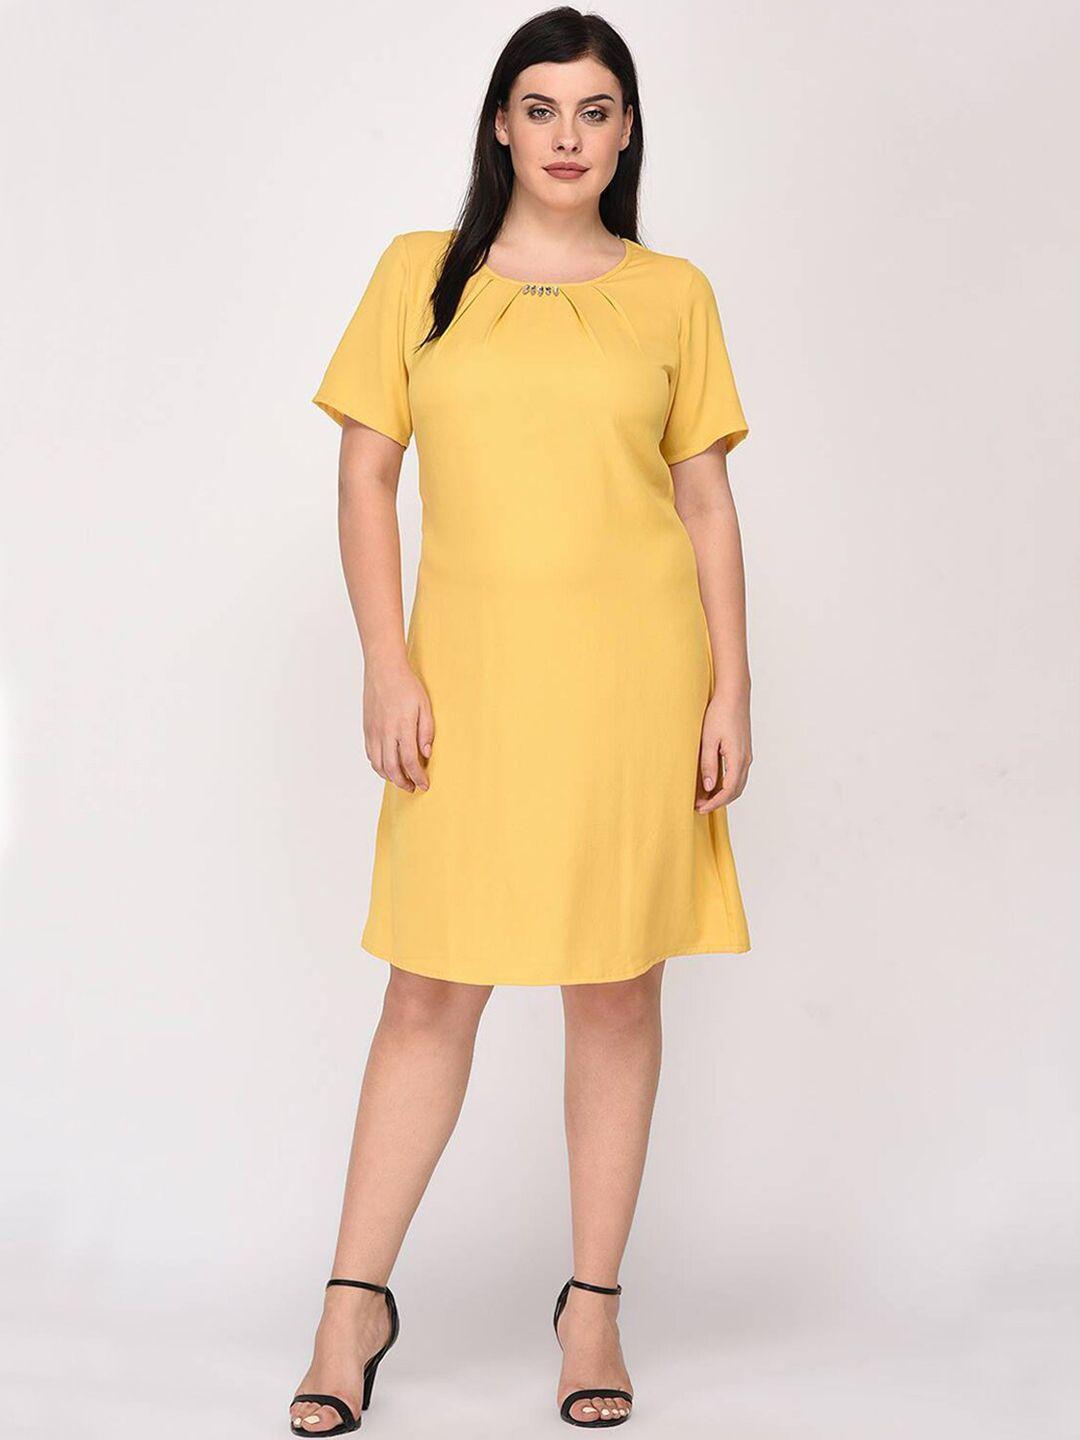 lastinch yellow solid a-line dress